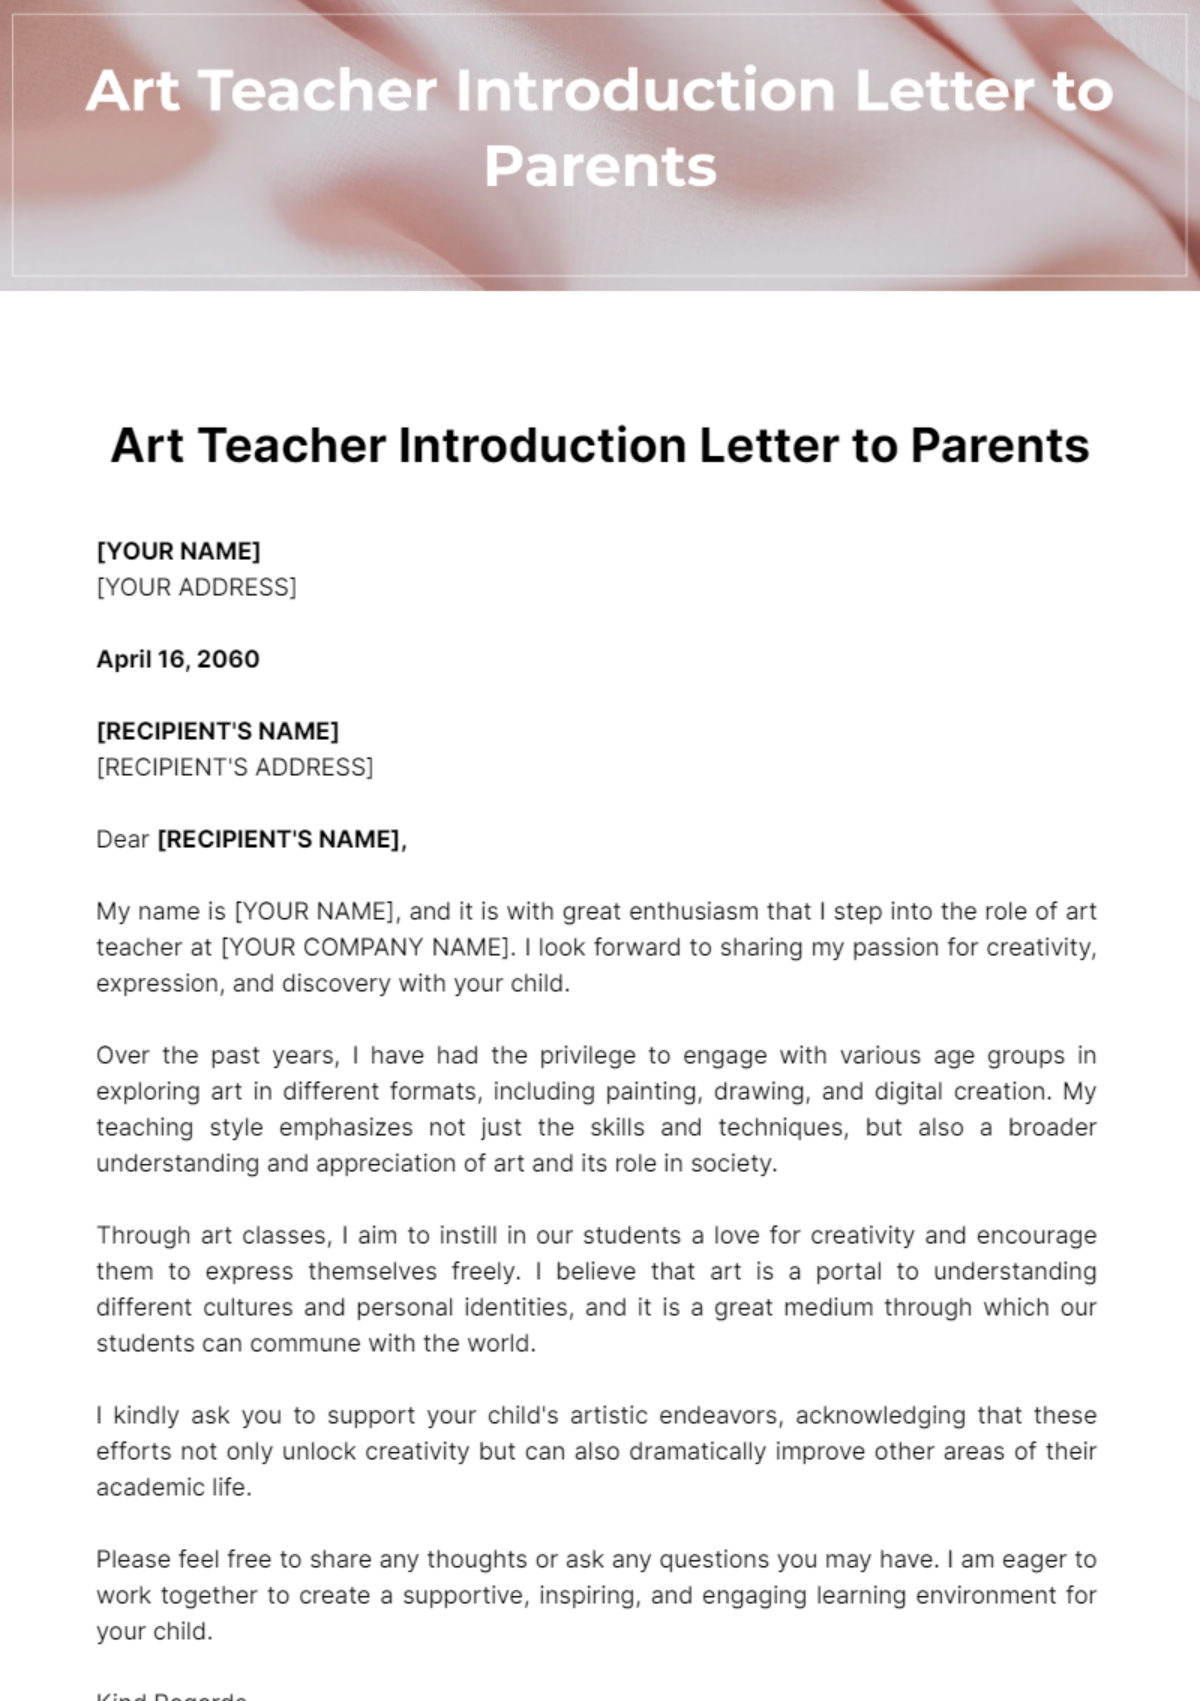 Free Art Teacher Introduction Letter to Parents Template